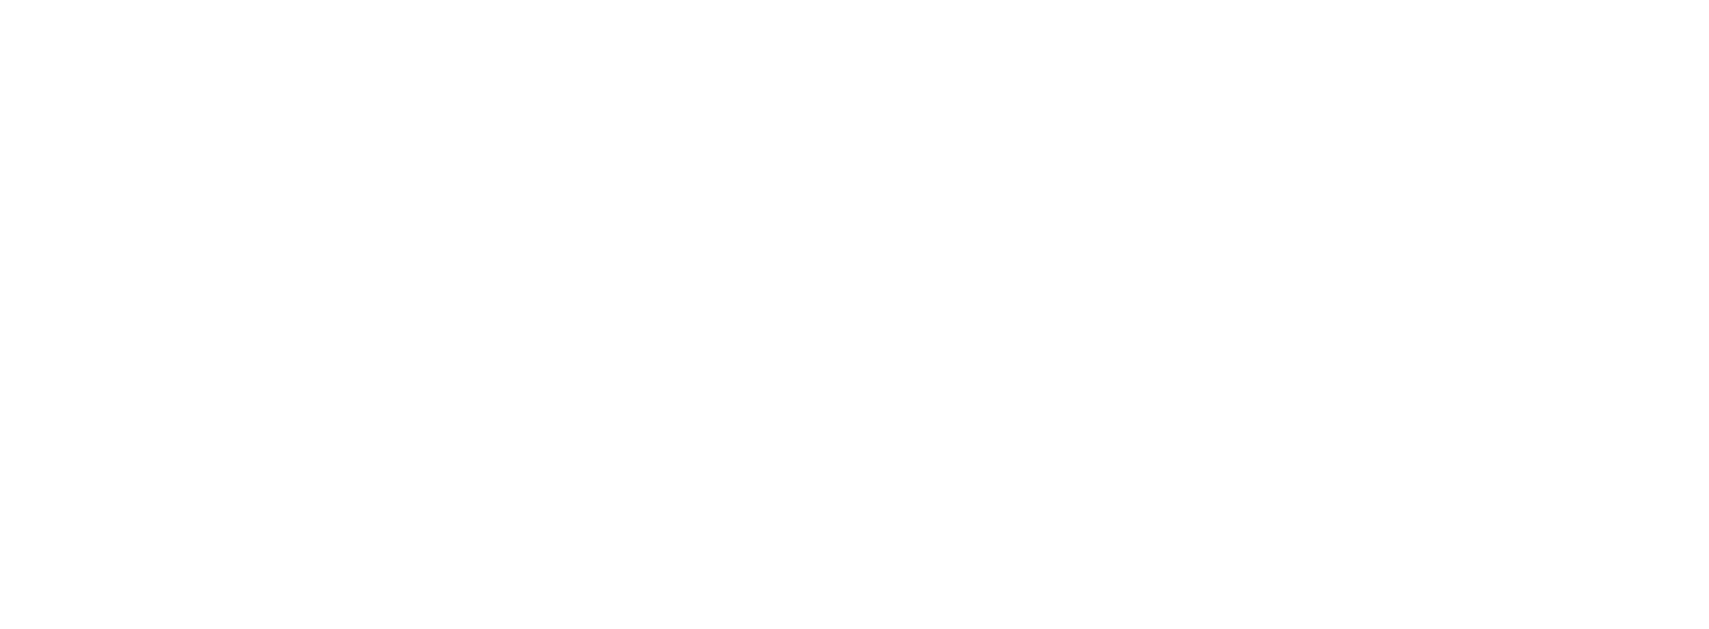 Hollar Logo - Hollar Black Friday Sale 2019